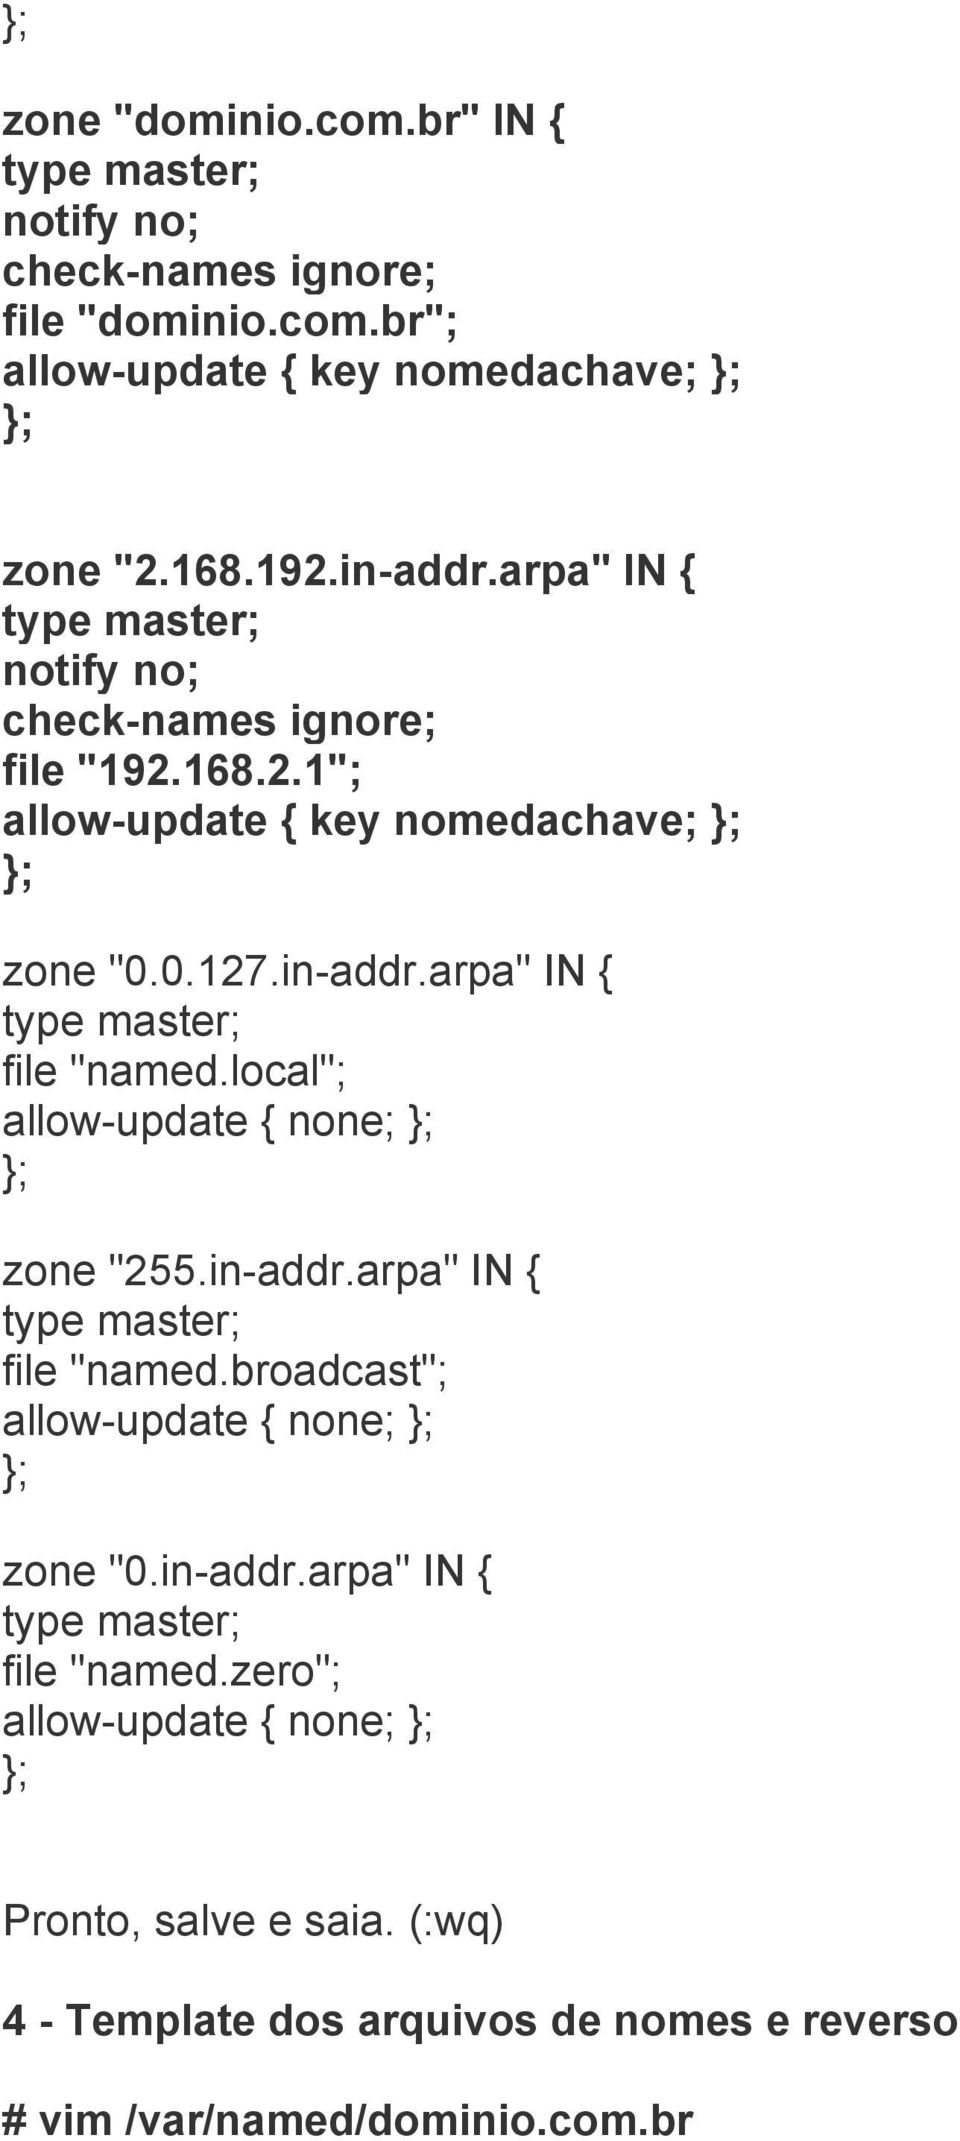 arpa" IN { file "named.local"; allow-update { none; zone "255.in-addr.arpa" IN { file "named.broadcast"; allow-update { none; zone "0.